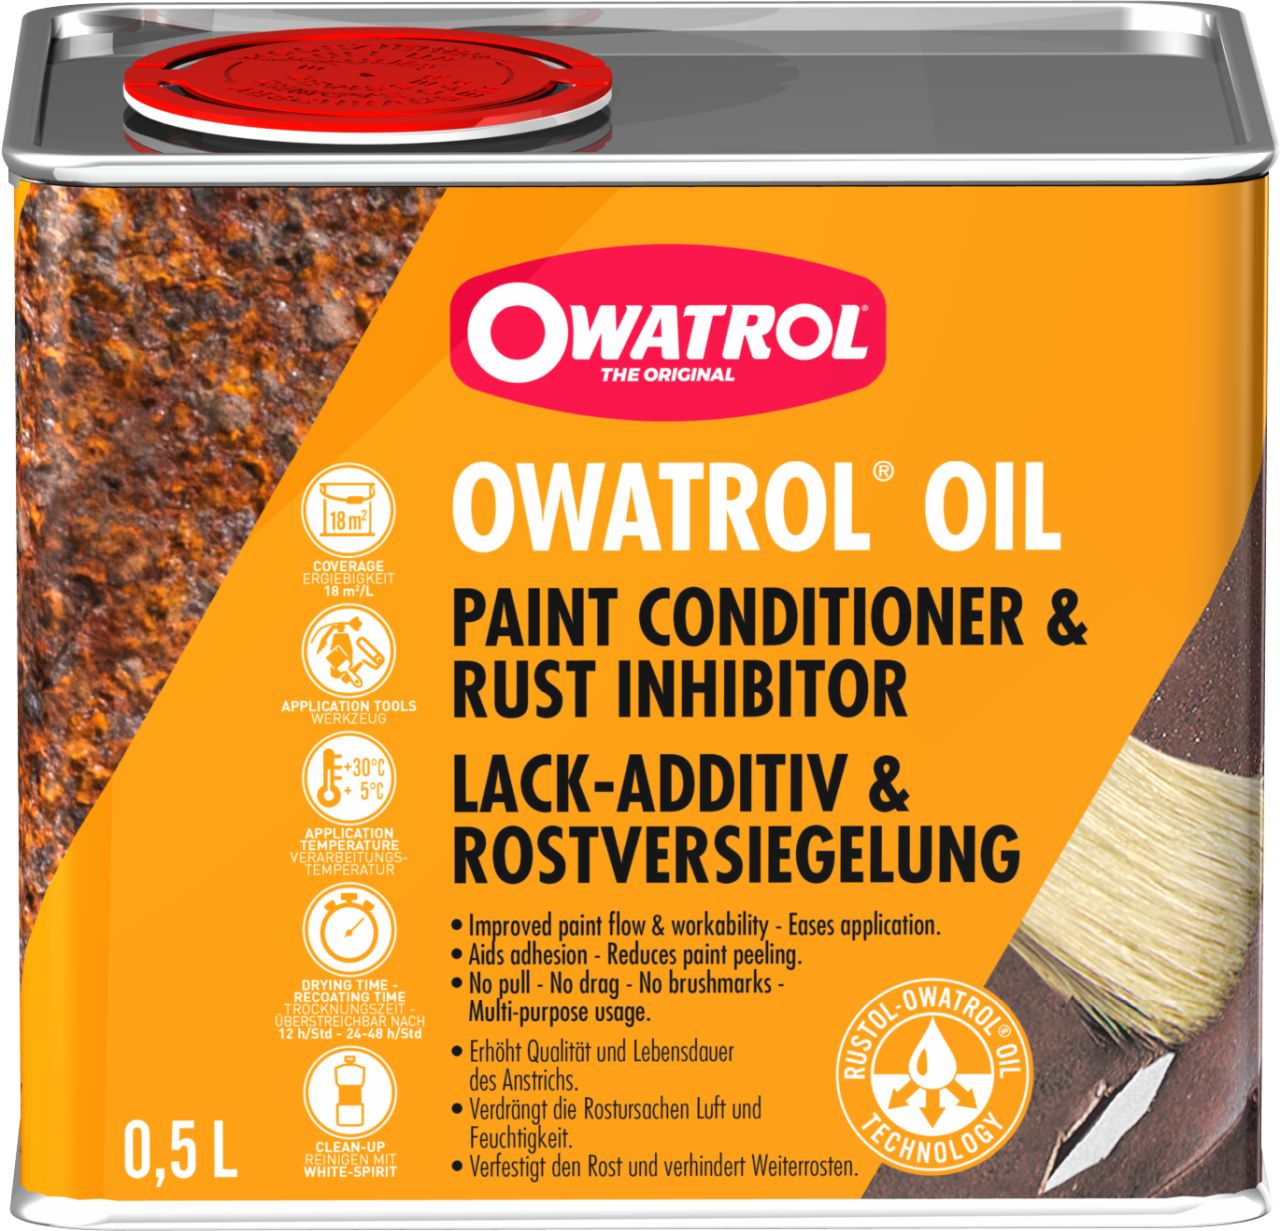 https://owatrol-kontor.de/media/image/a5/5d/b6/Owatrol_OWATROL_OIL_0L5_GB-DE.jpg